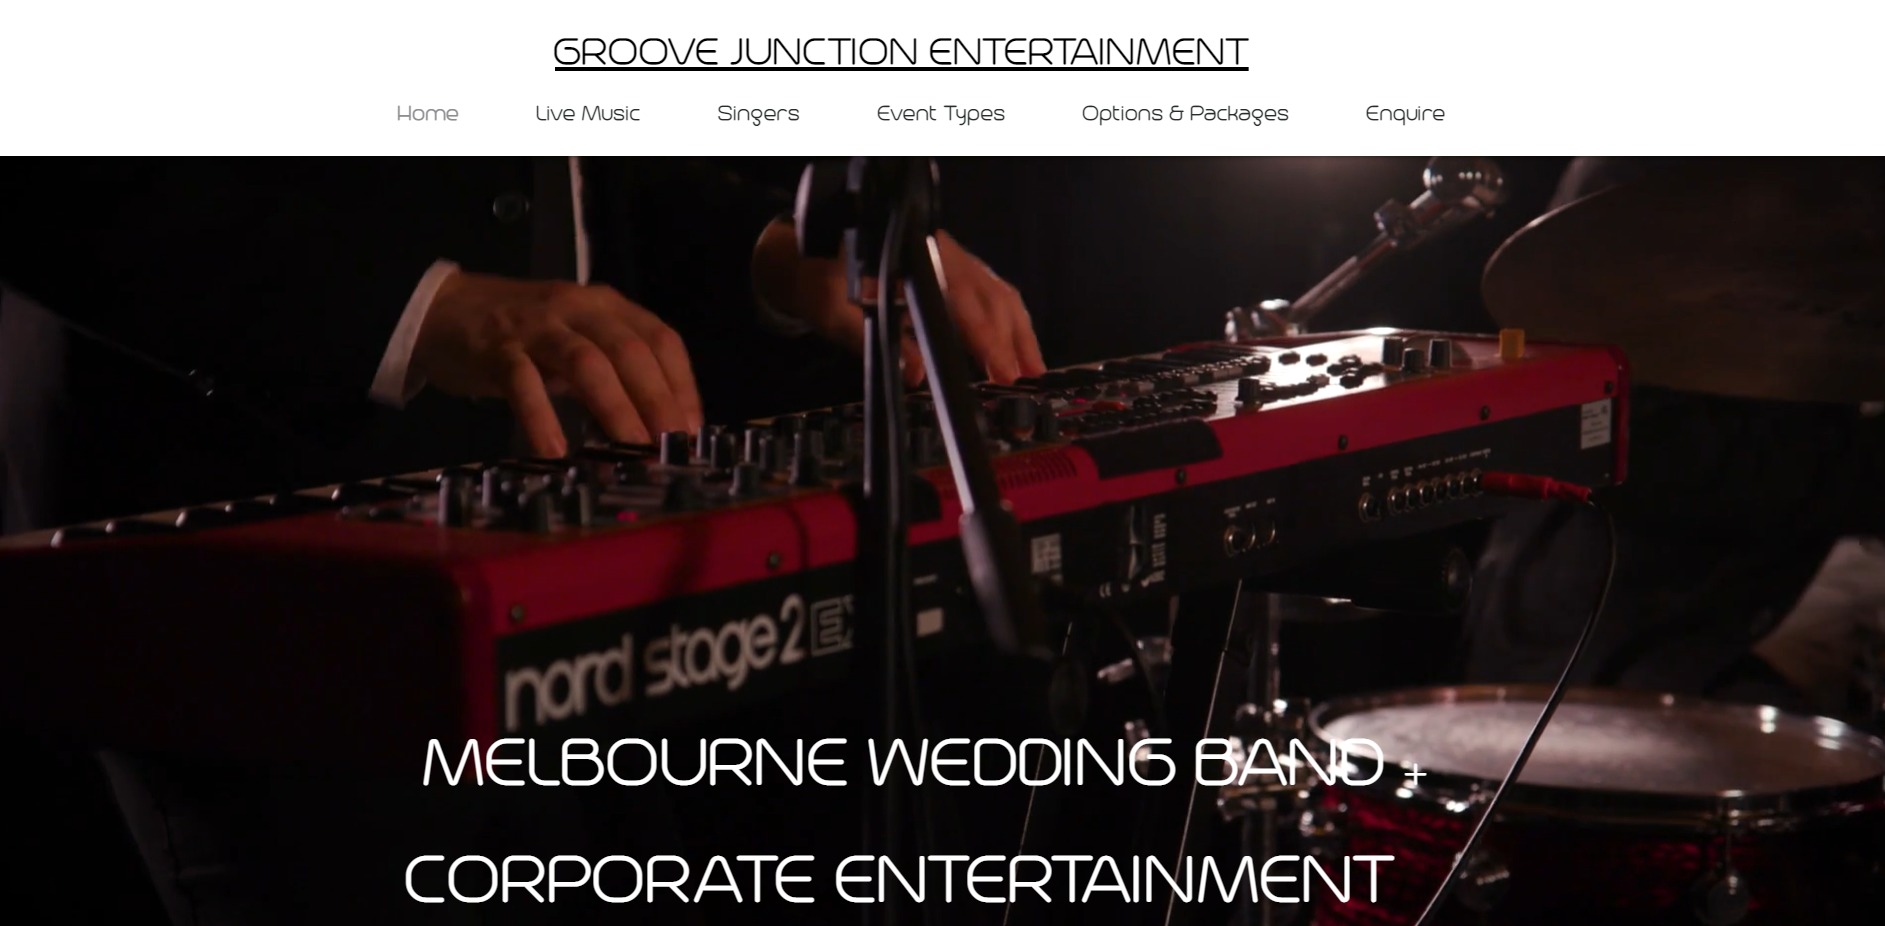 Groove Junction Entertainment